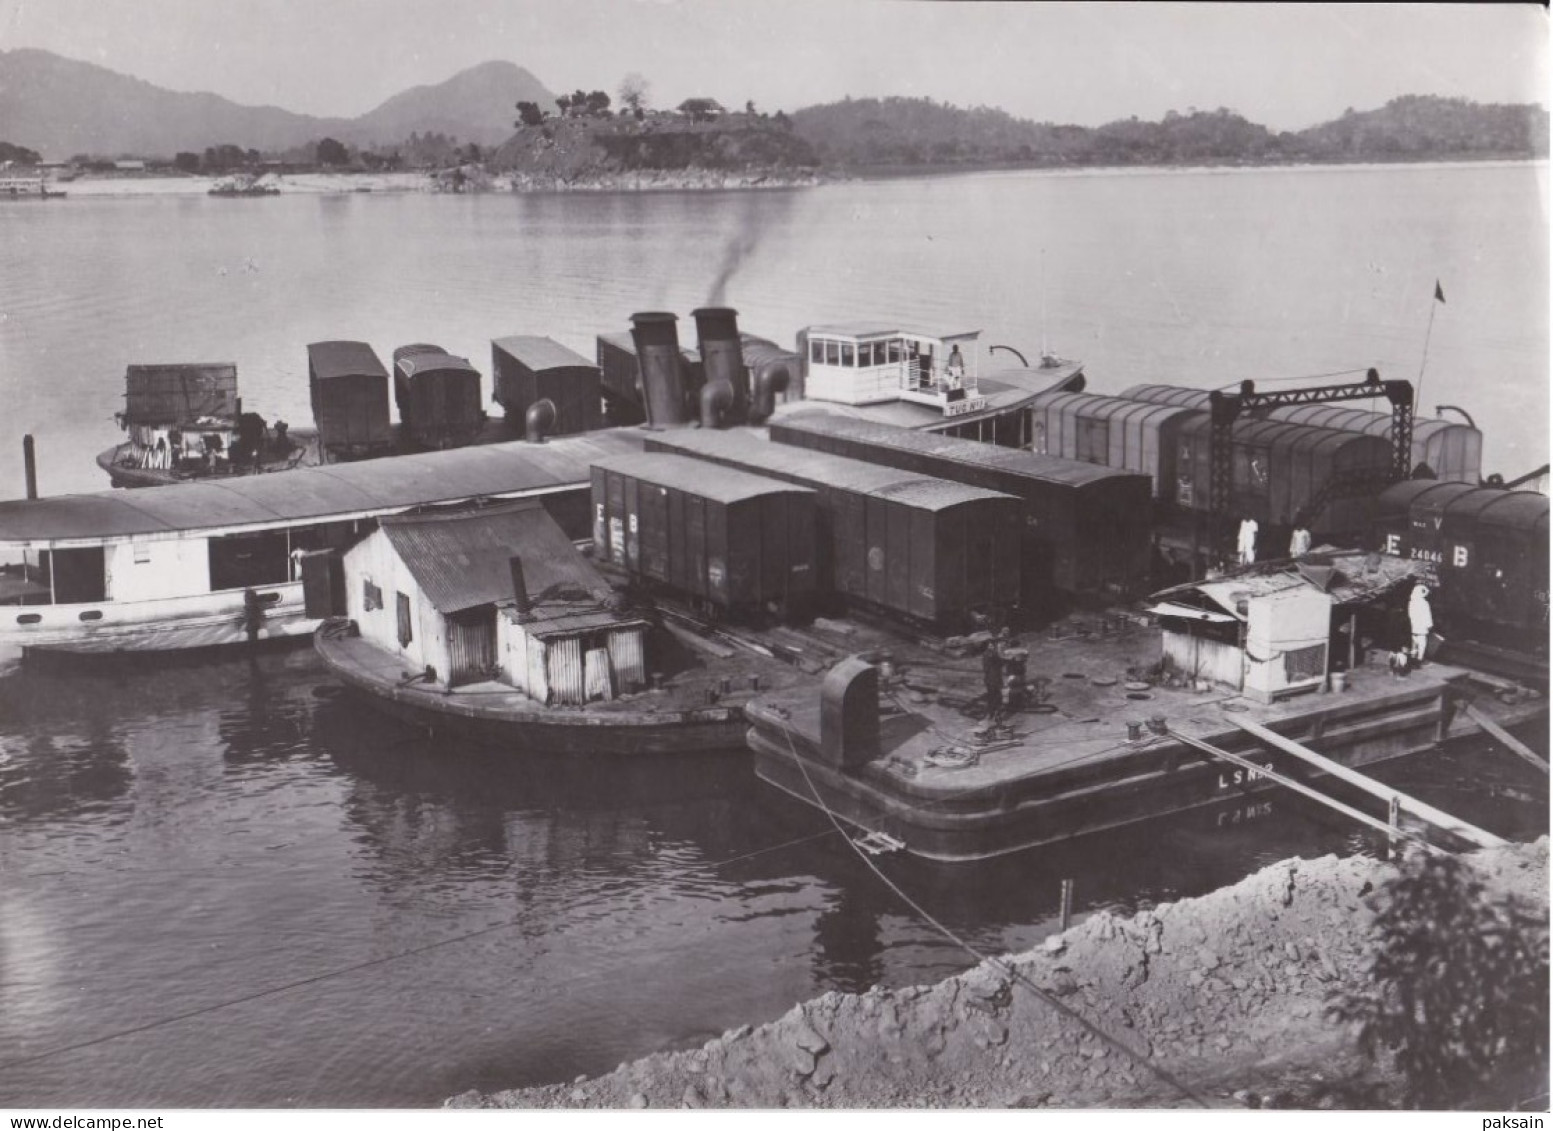 Birmanie - 7 photos 1930 Pagde Pagoda Rangoon Burma ferry Train Ferries bateau boat Myanmar Burma